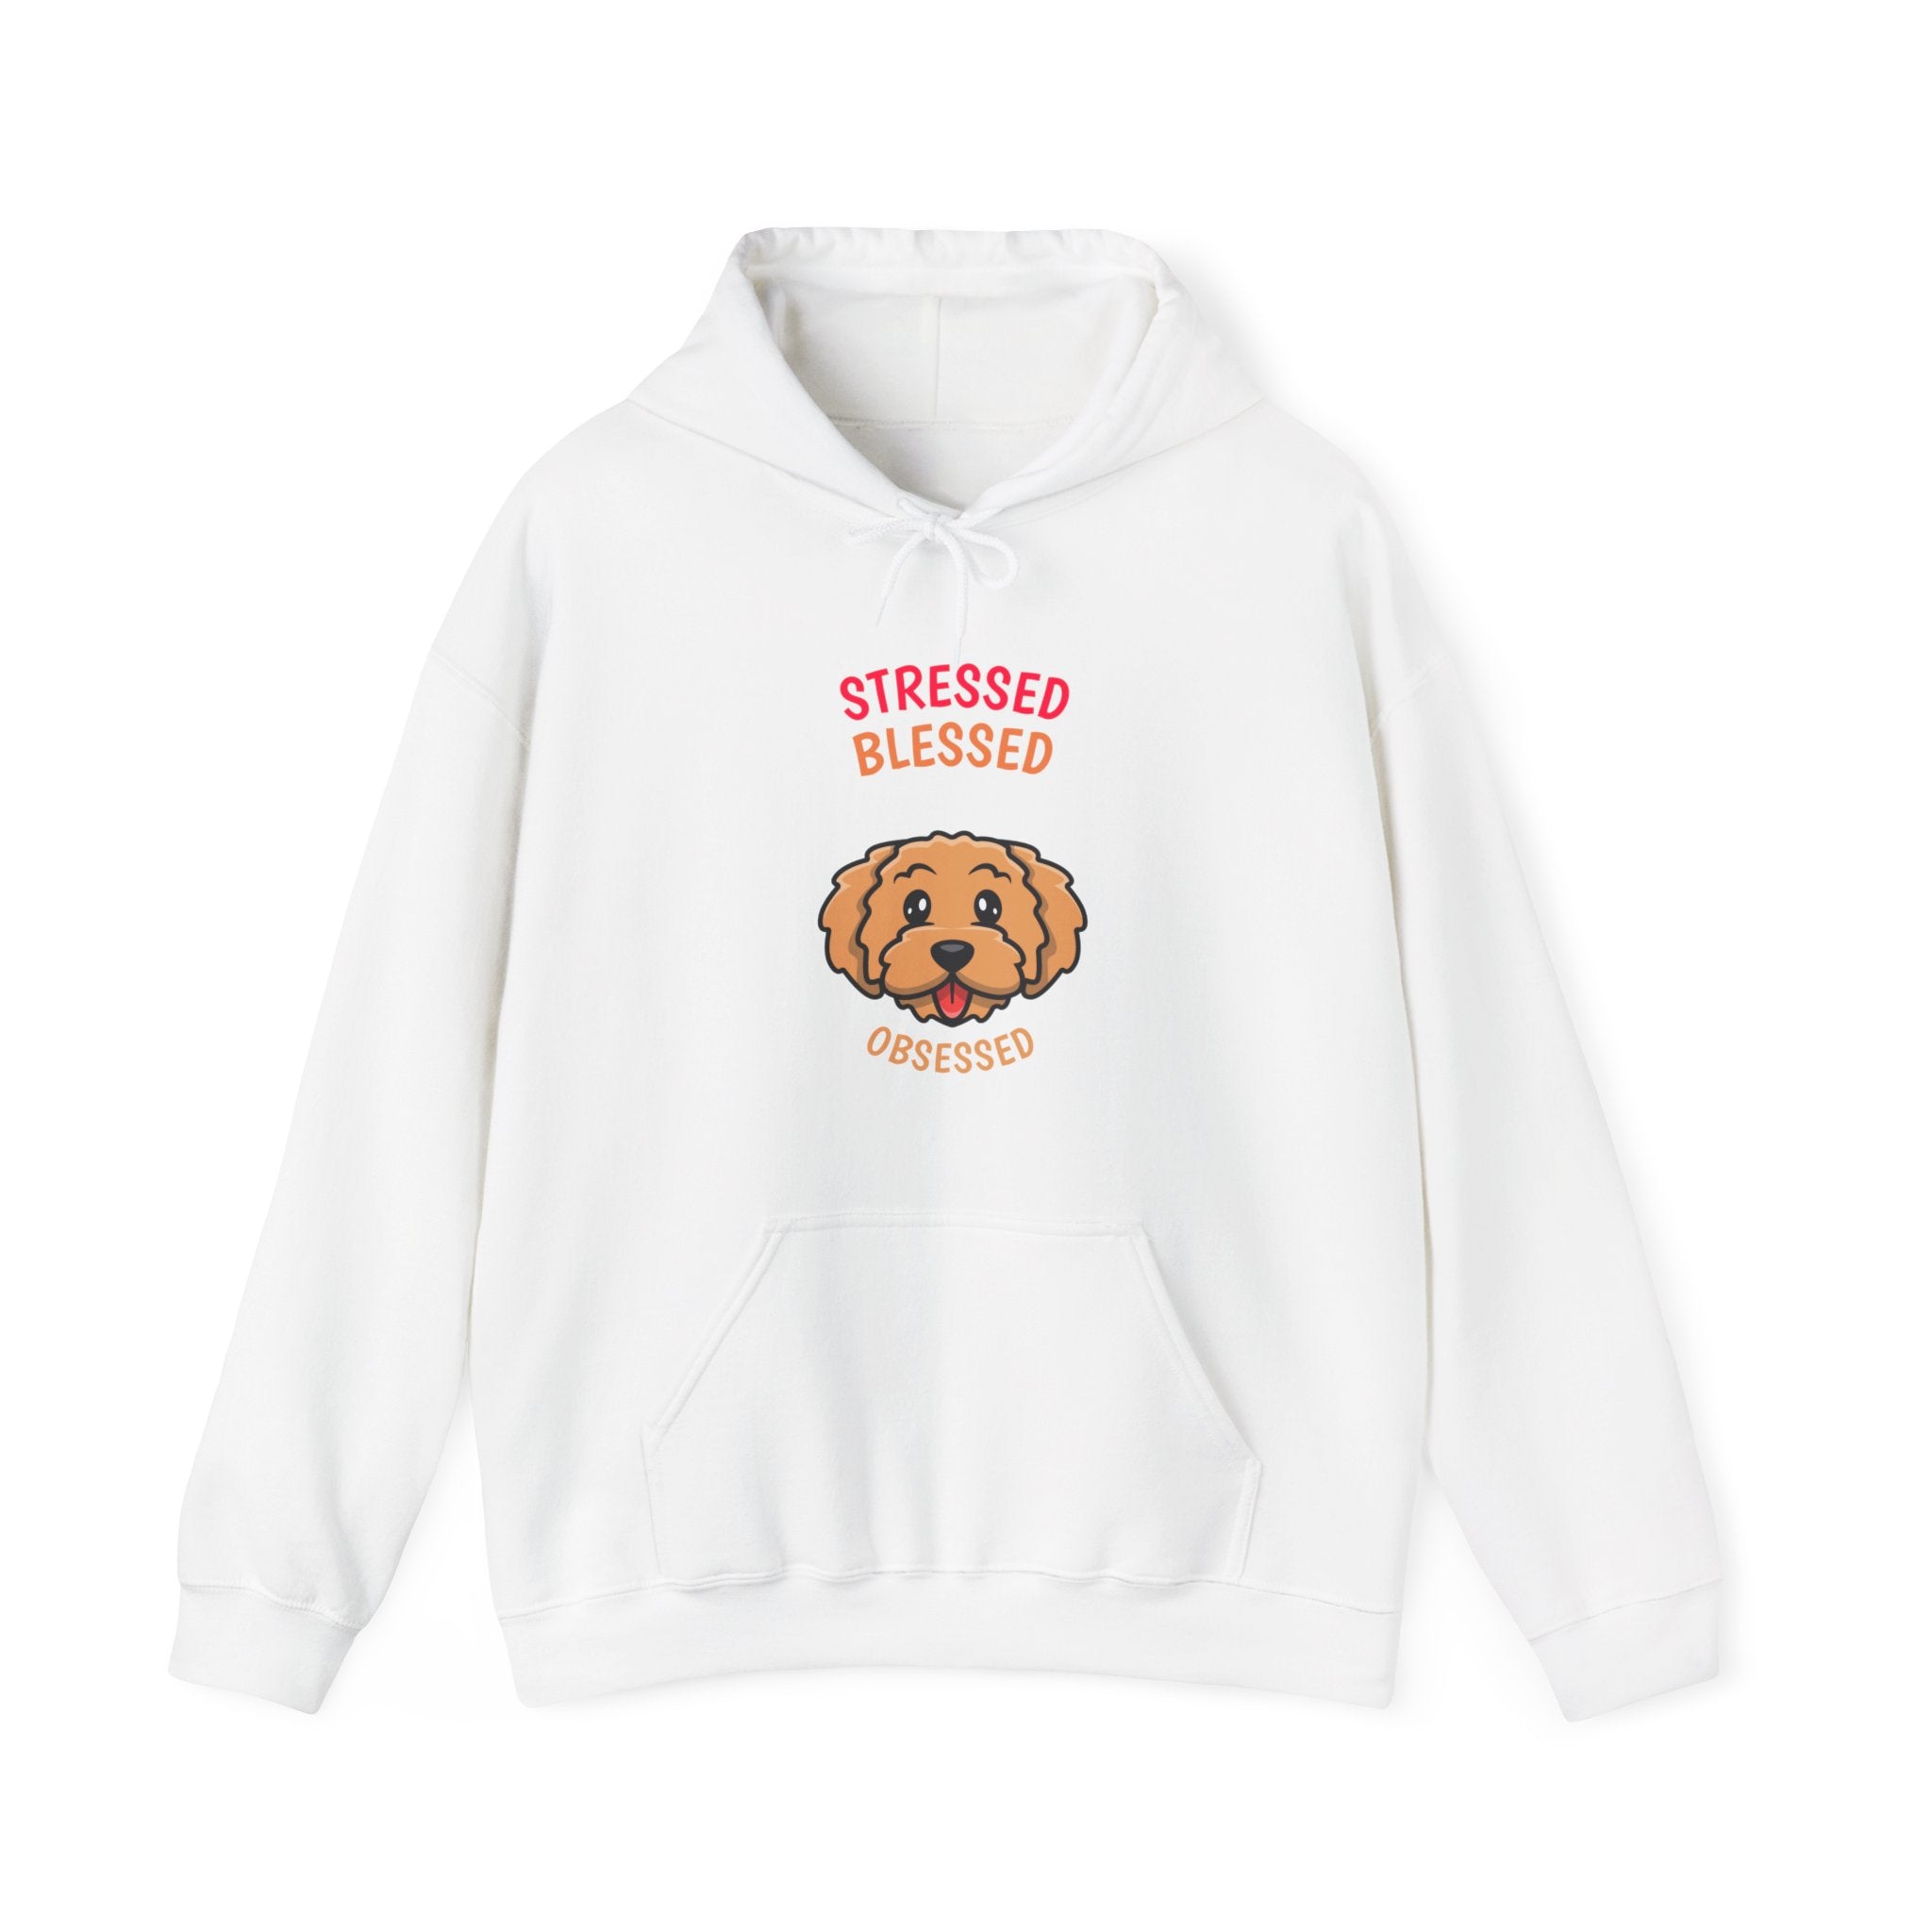 Poodle Obsessed - Hooded Sweatshirt